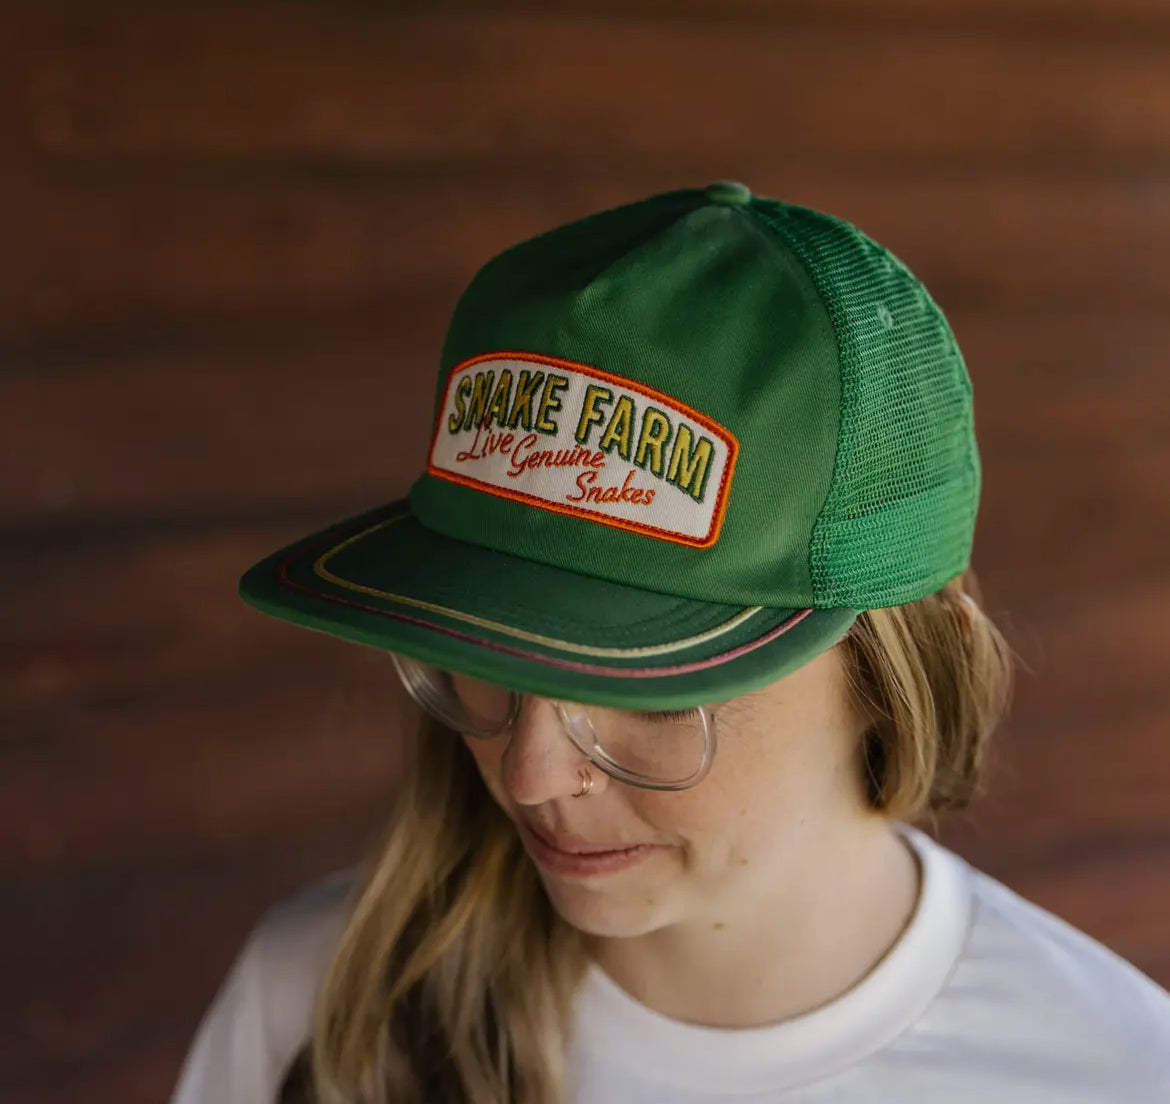 Snake Farm Hat- Green